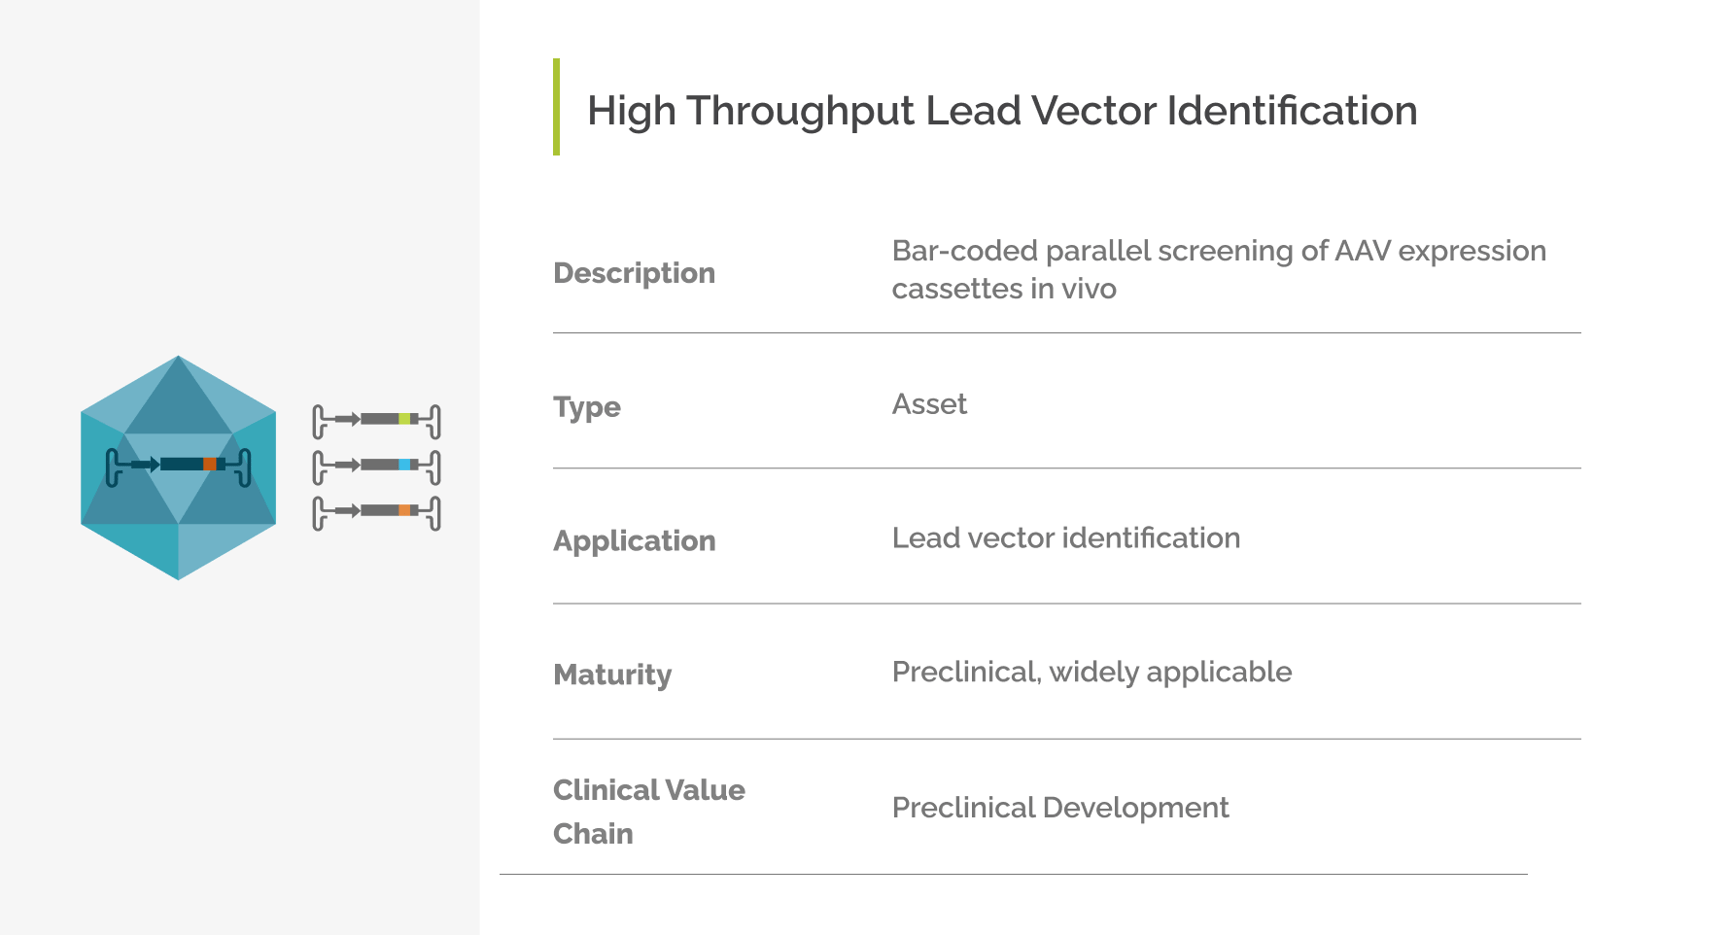 High Throughput Lead Vector Identification Table